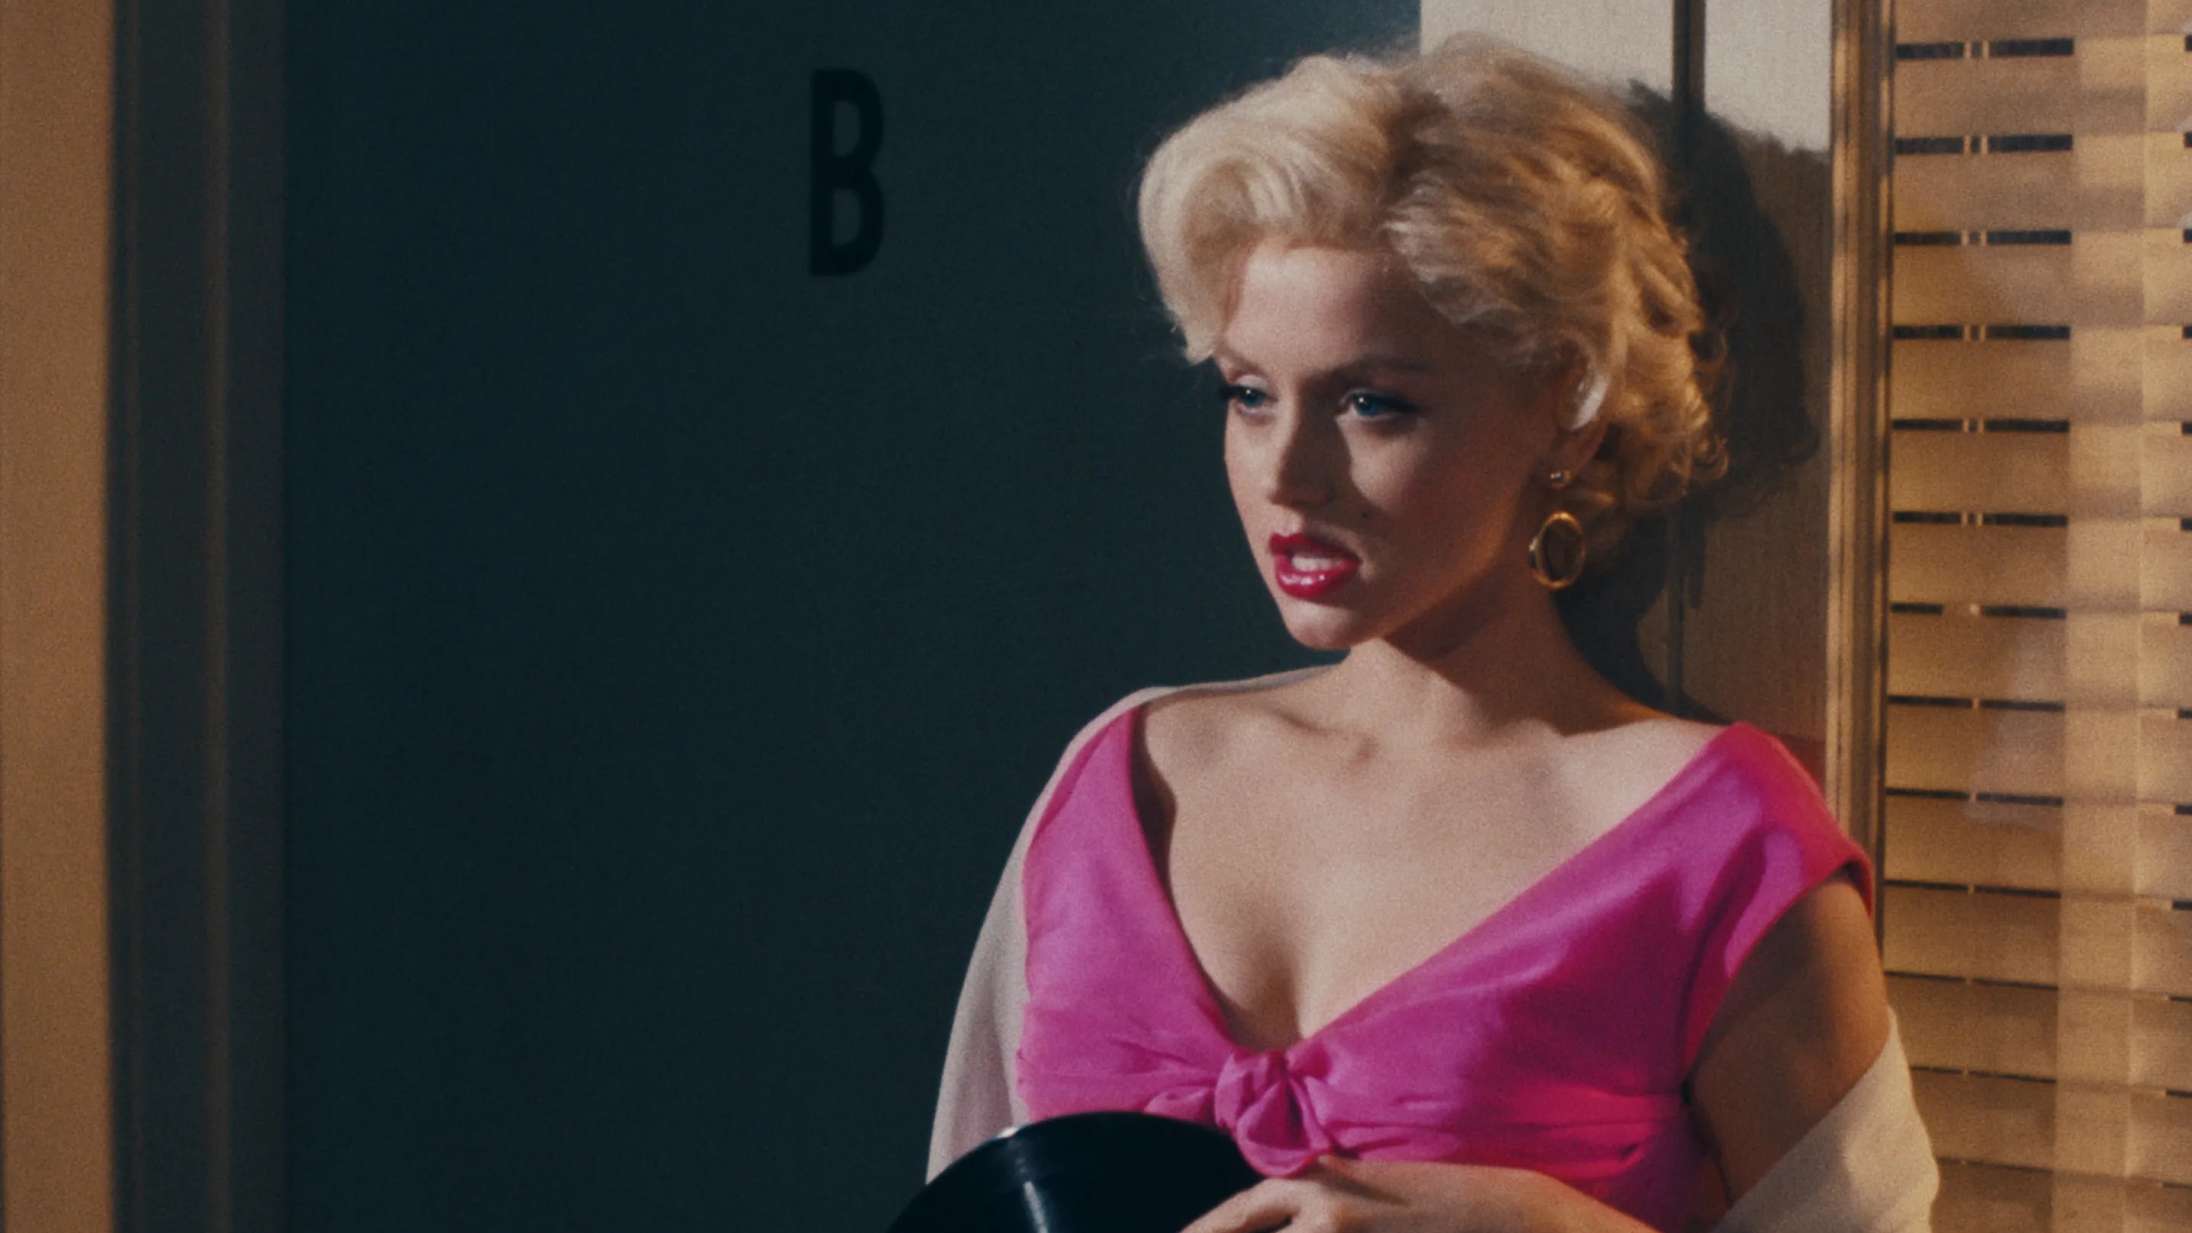 Den store Netflix-film med Ana De Armas som Marilyn Monroe er intet mindre end et granatchok